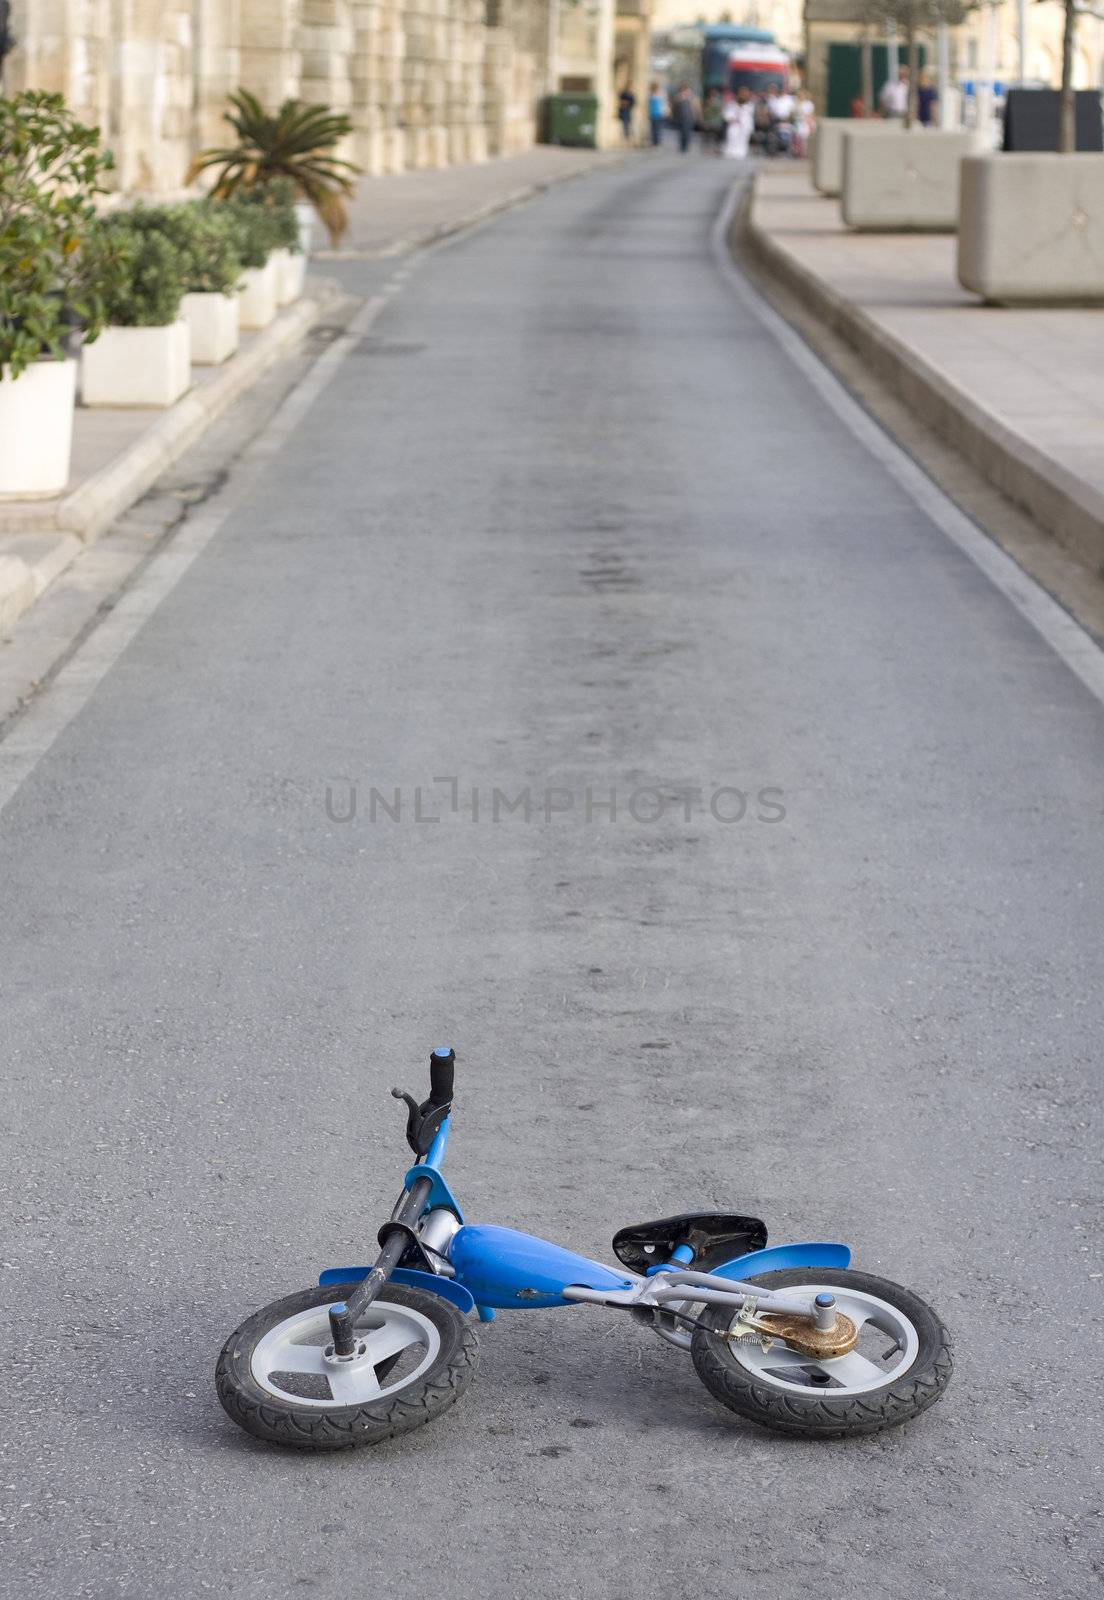 Abandoned kids bike on deserted road by annems